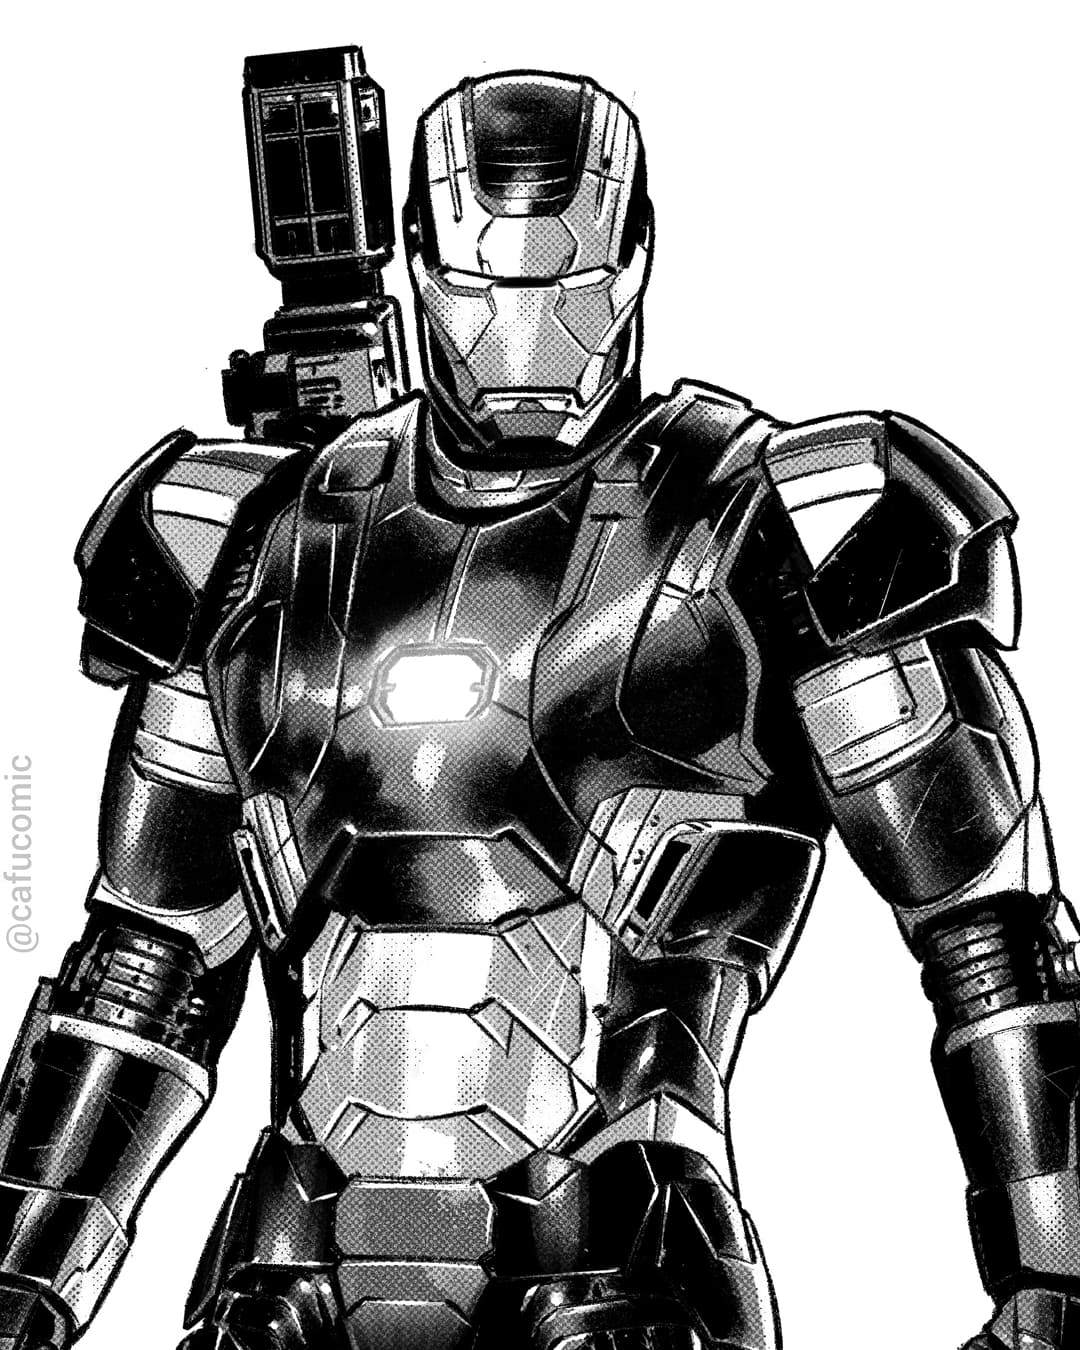 War Machine #1 Jim Rhodes: The Armor and the Attitude Lee Marvel Comic Book  1 | eBay